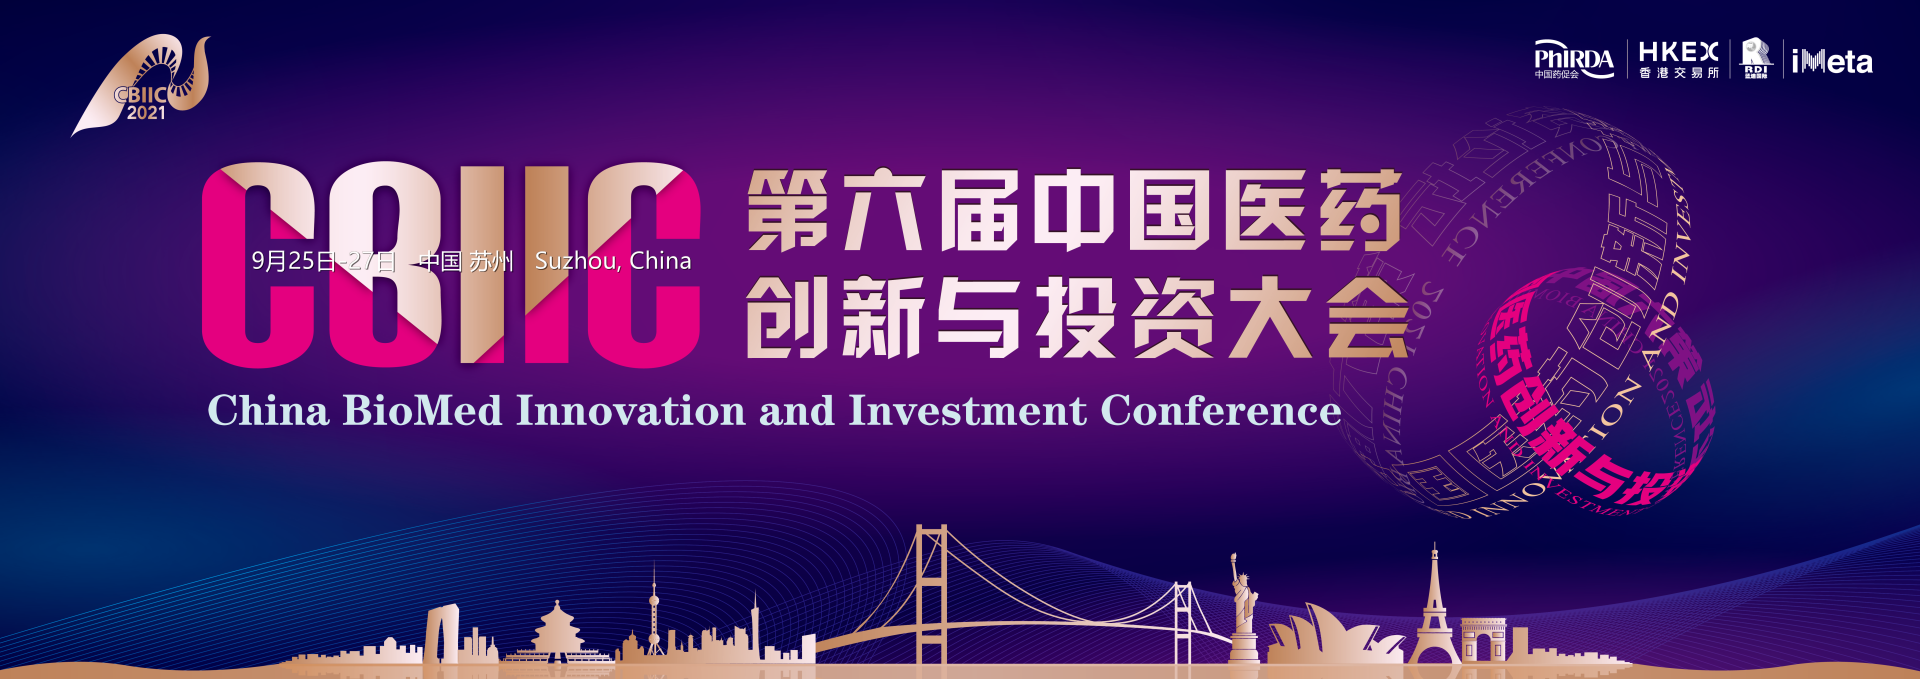 2021CBIIC第六届中国医药创新与投资大会